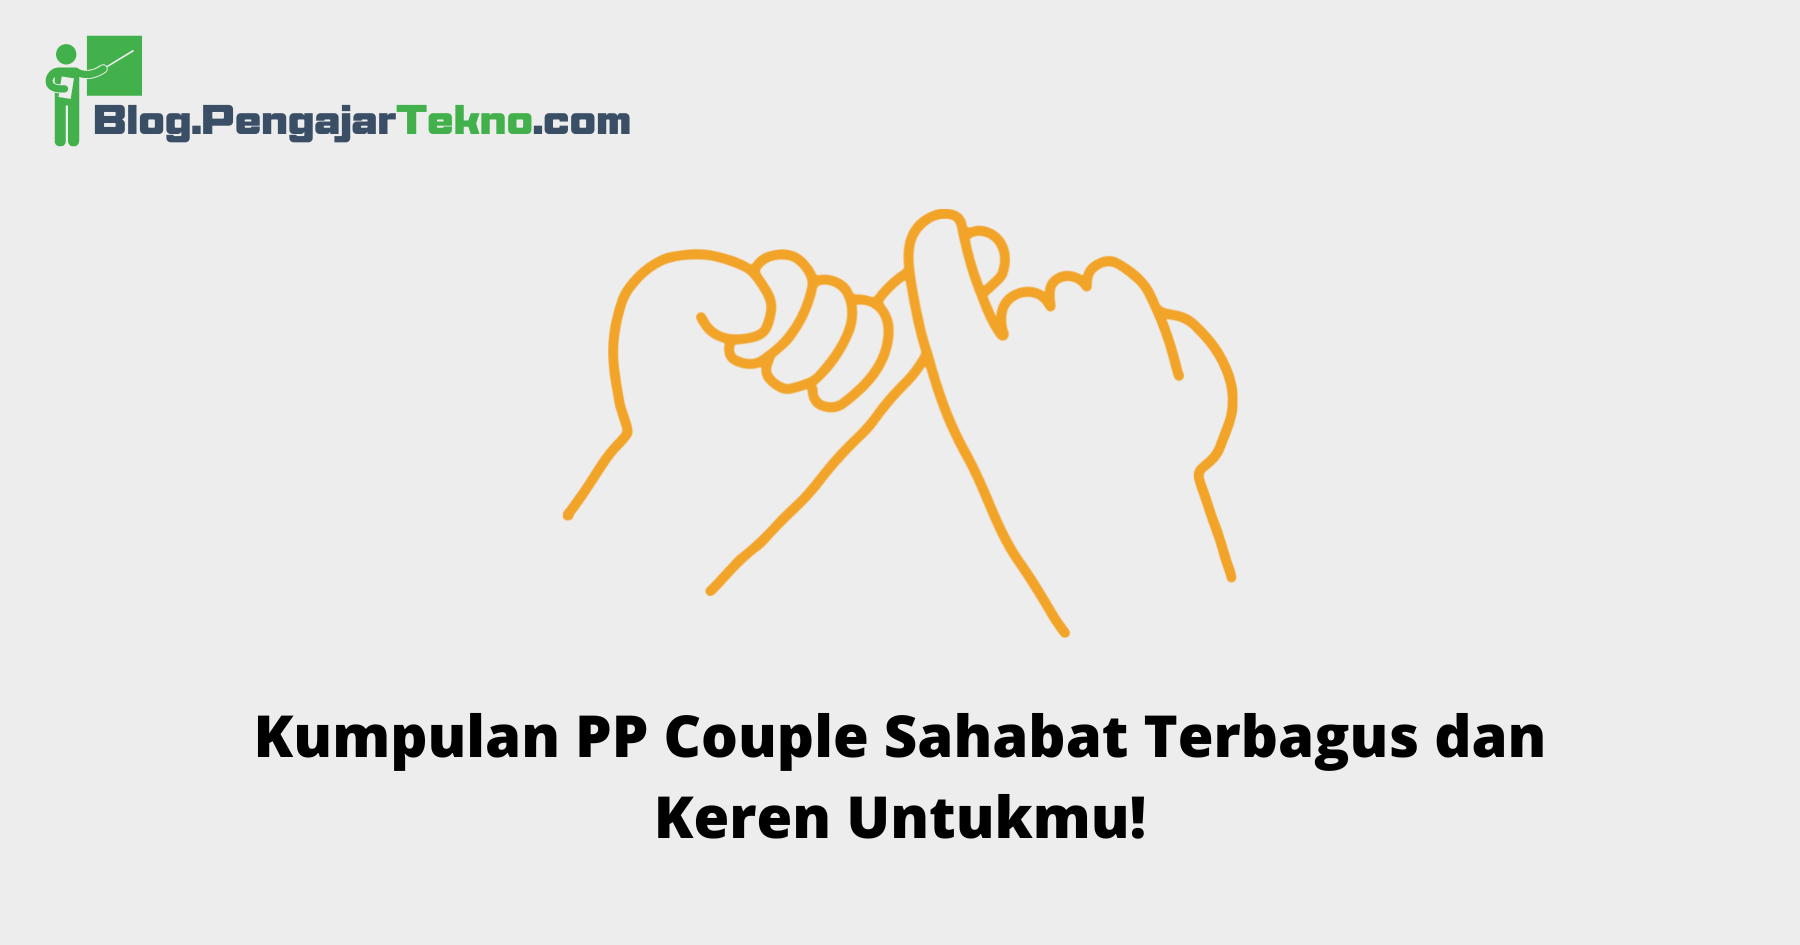 pp couple sahabat